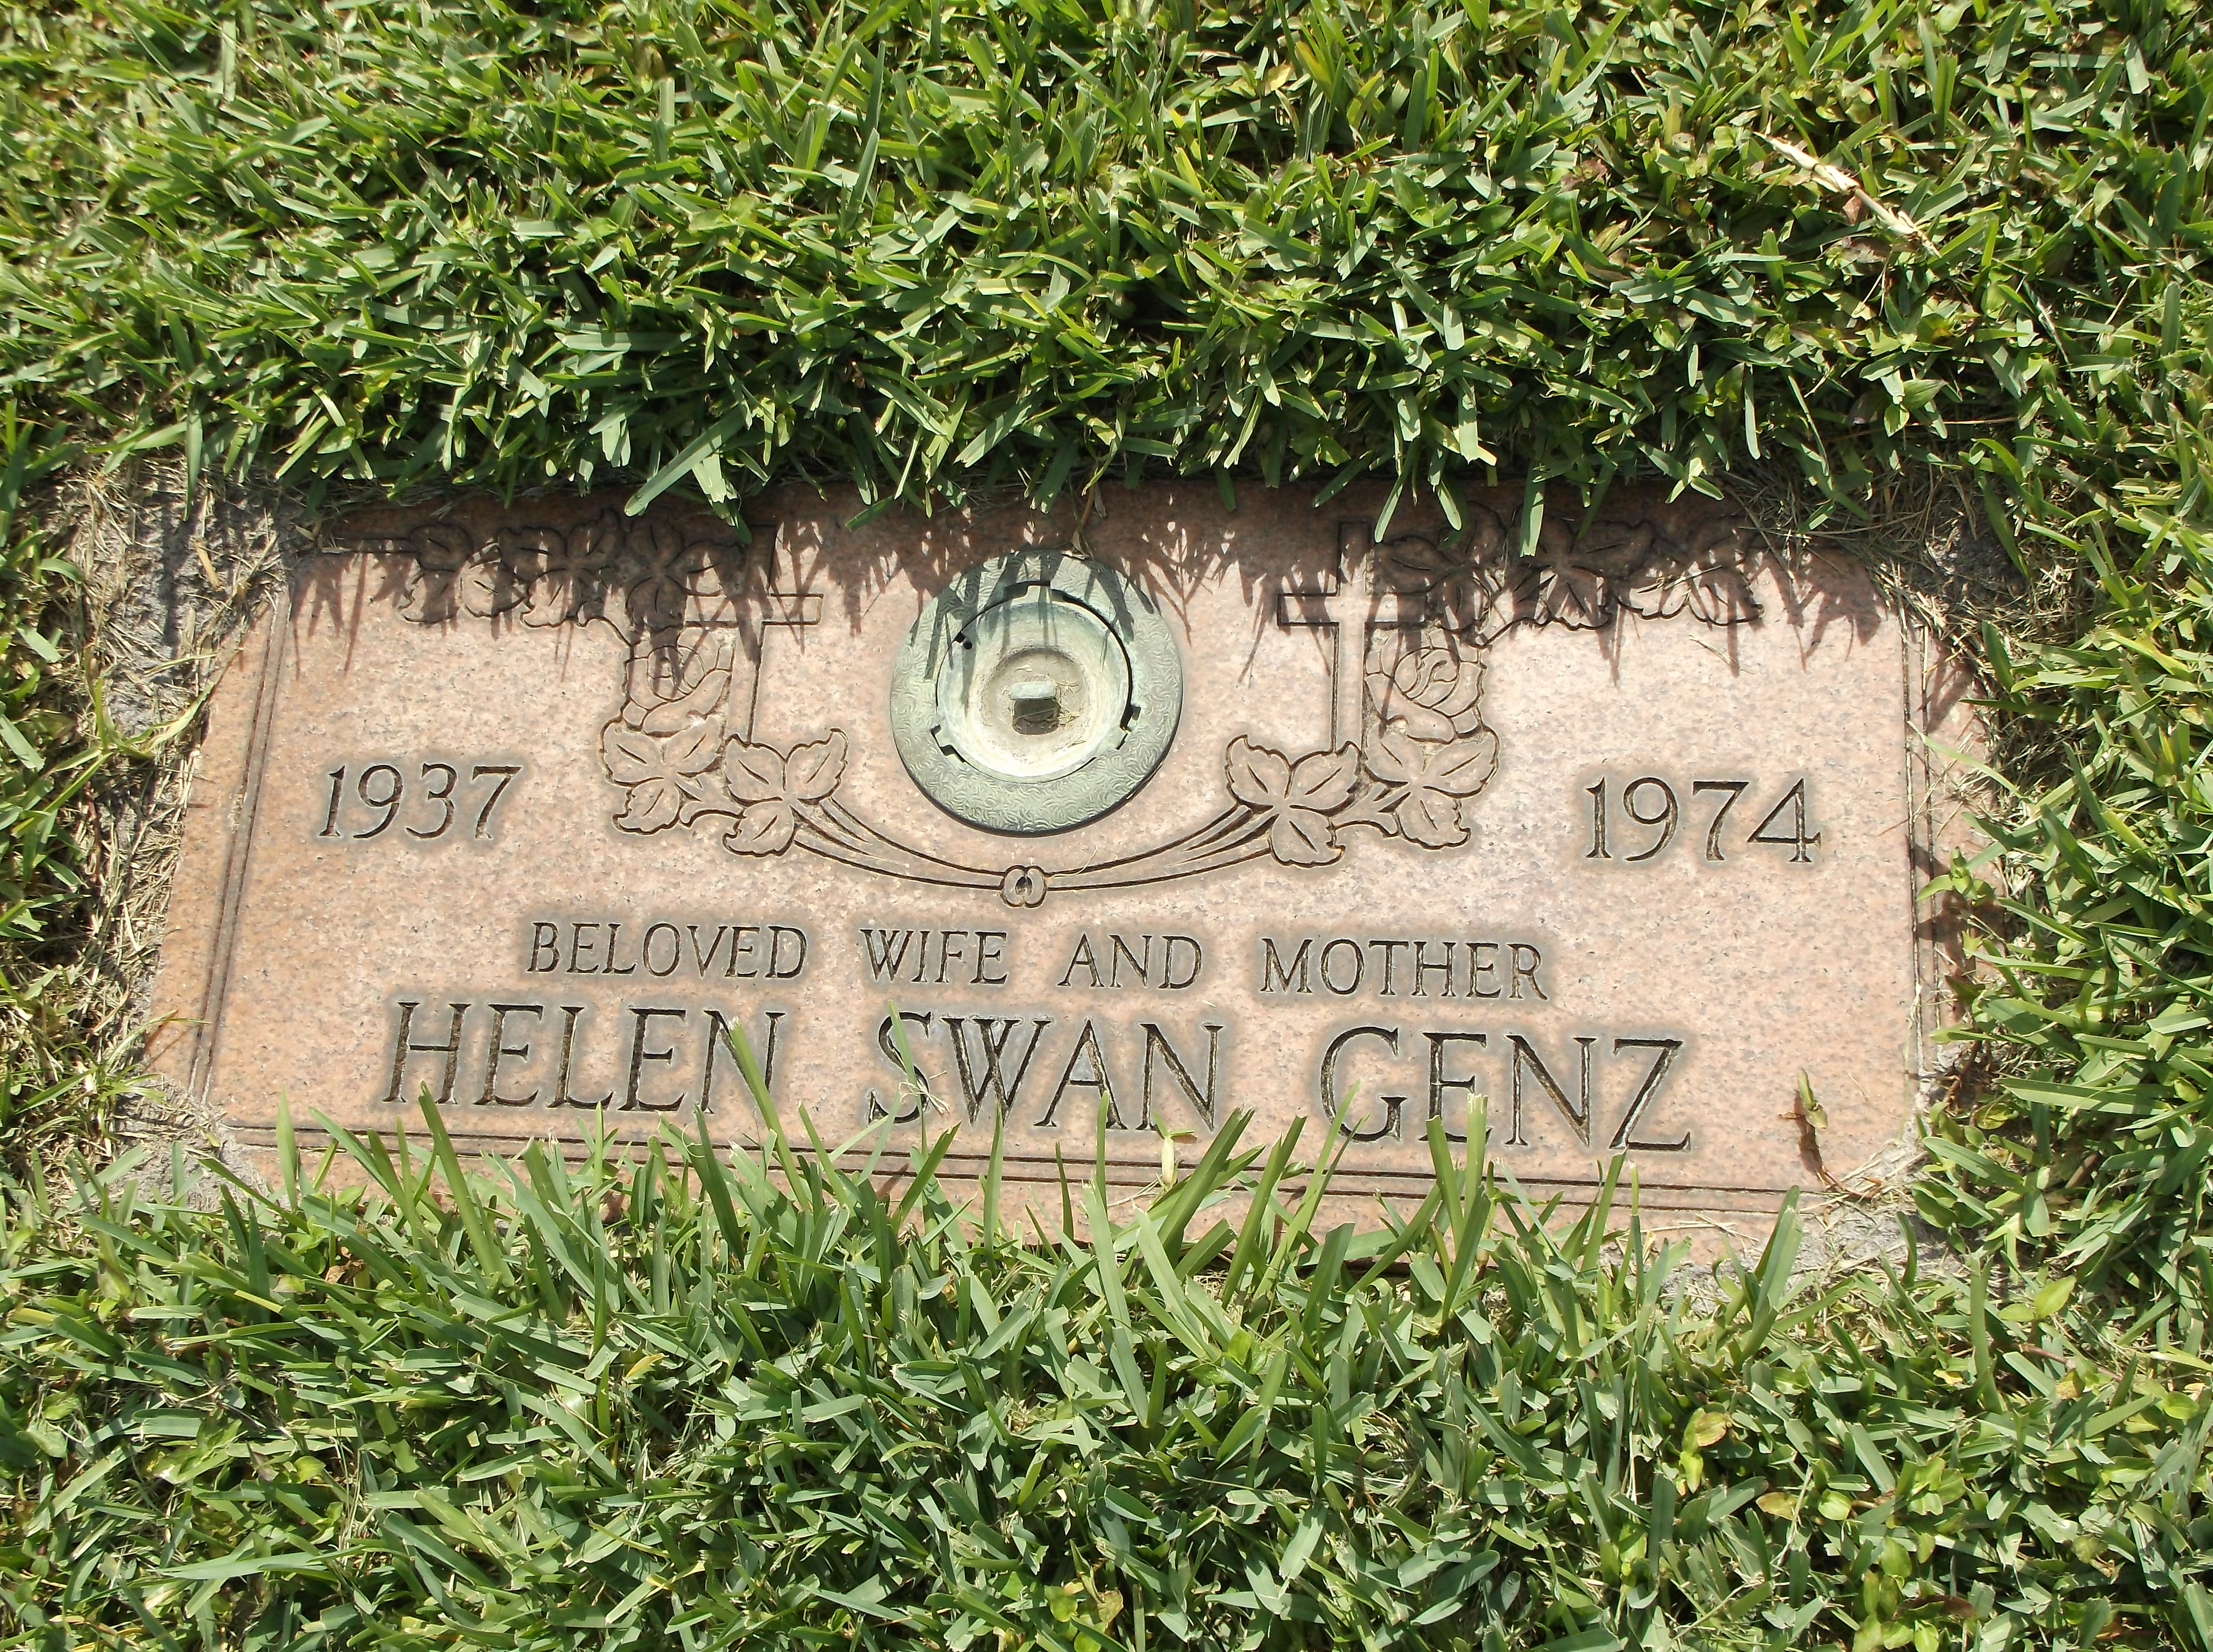 Helen Swan Genz